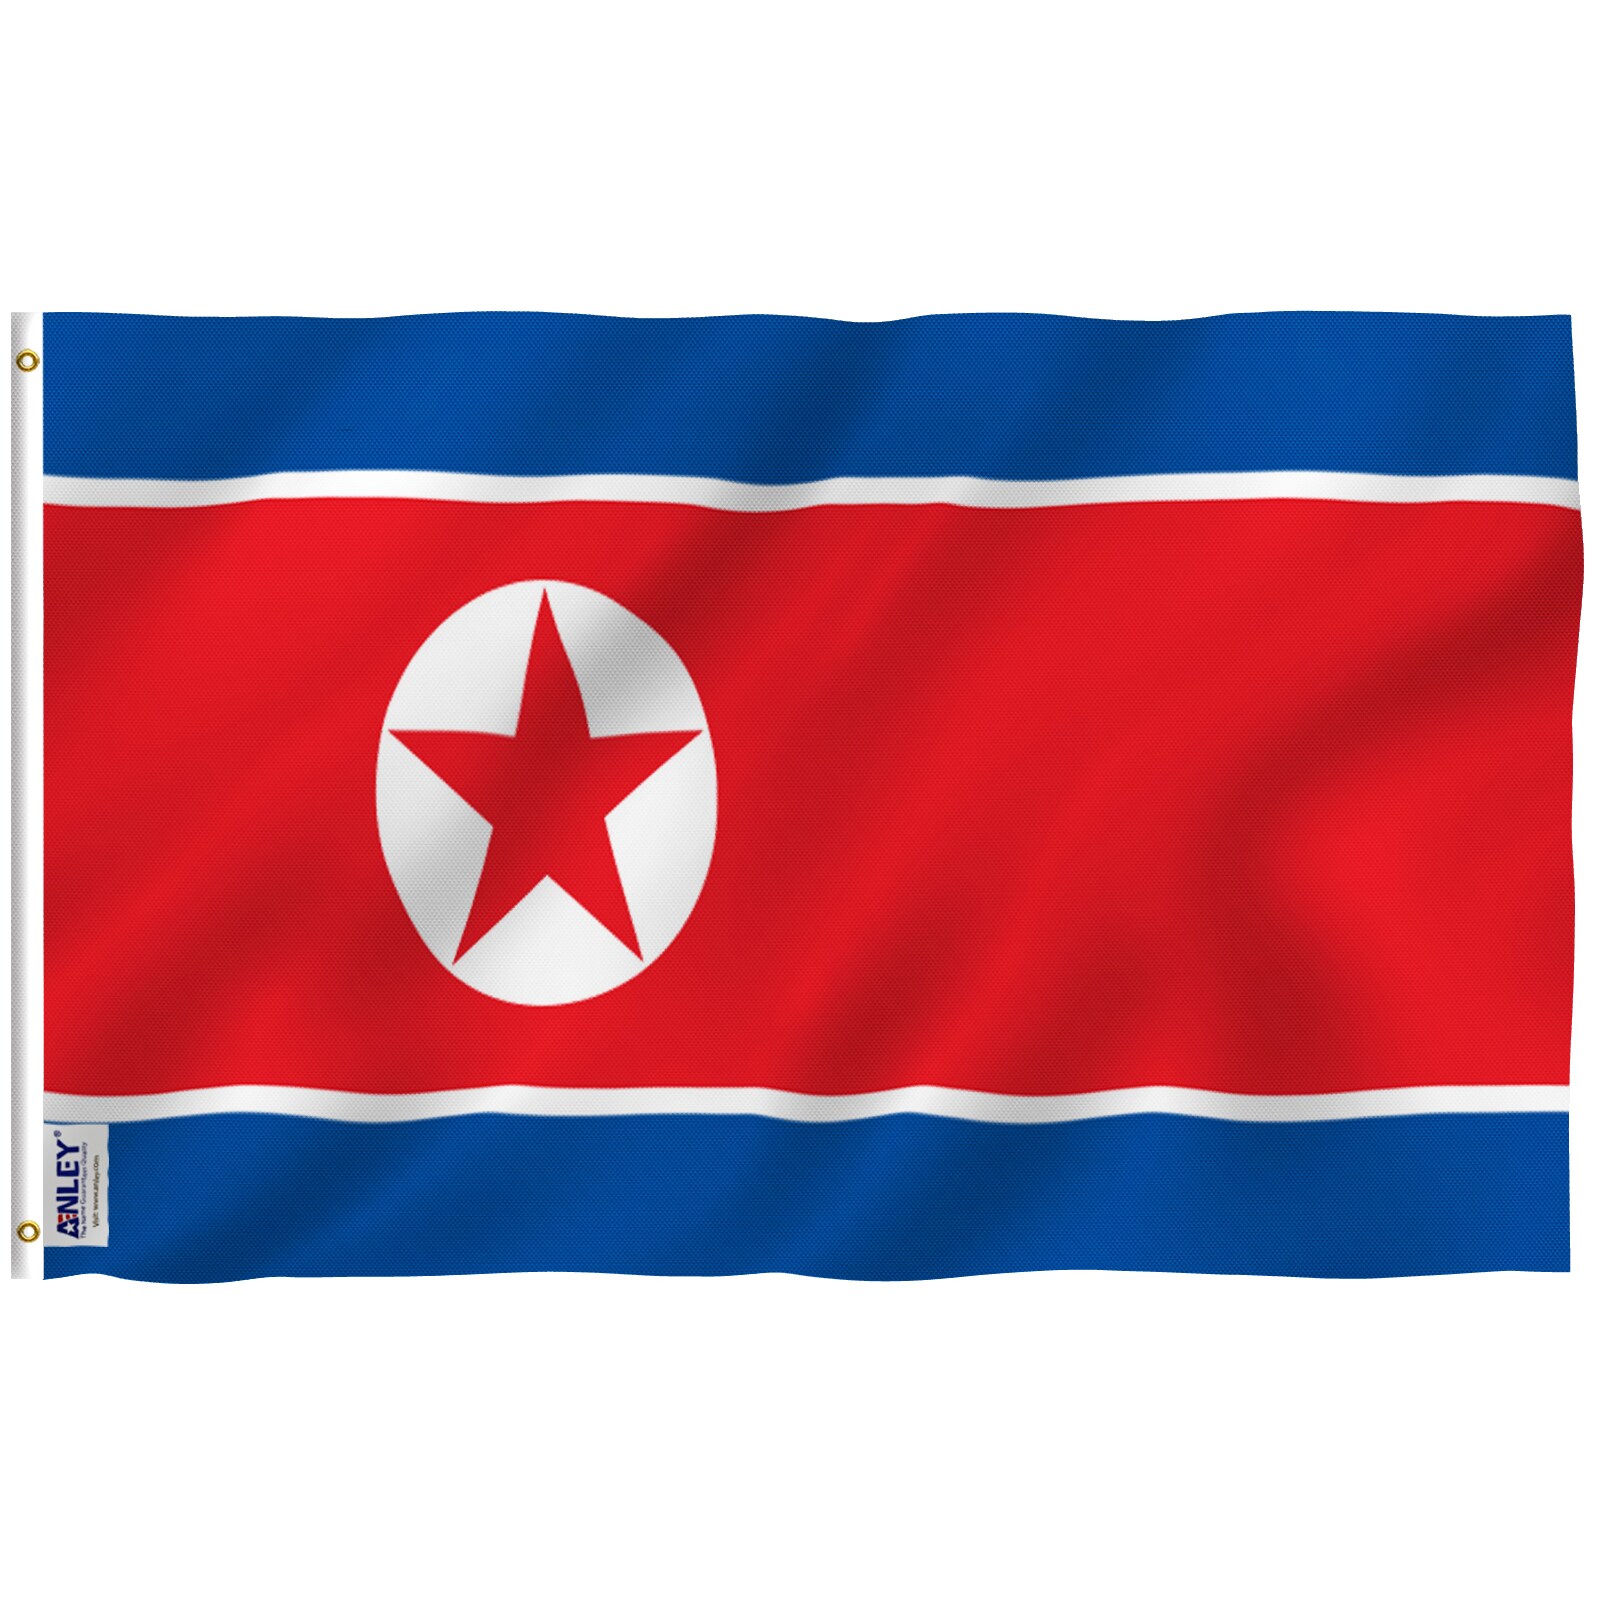 North Korea Flag Wallpapers